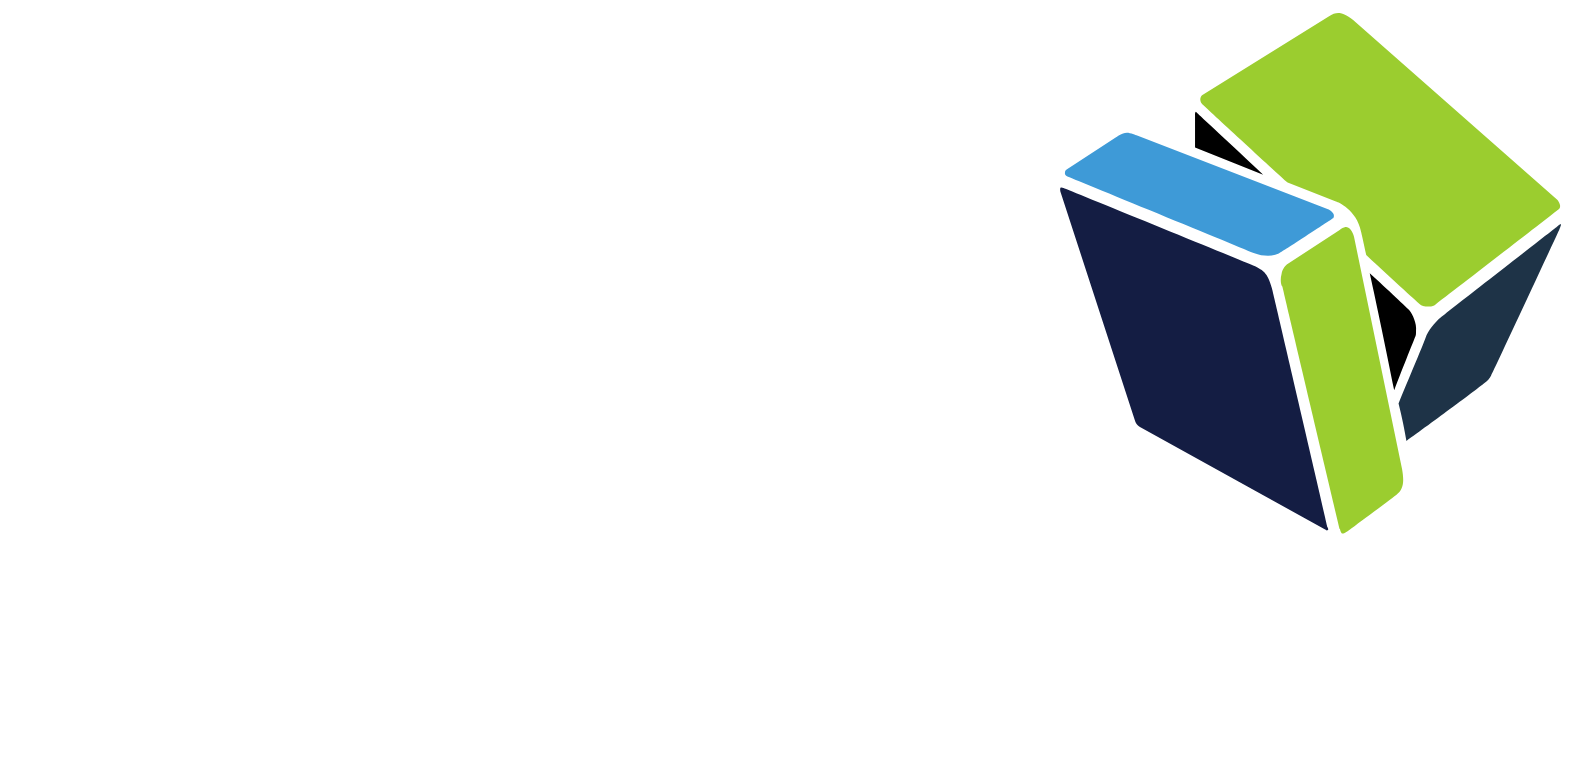 NTG Nordic Transport Group A/S logo large for dark backgrounds (transparent PNG)